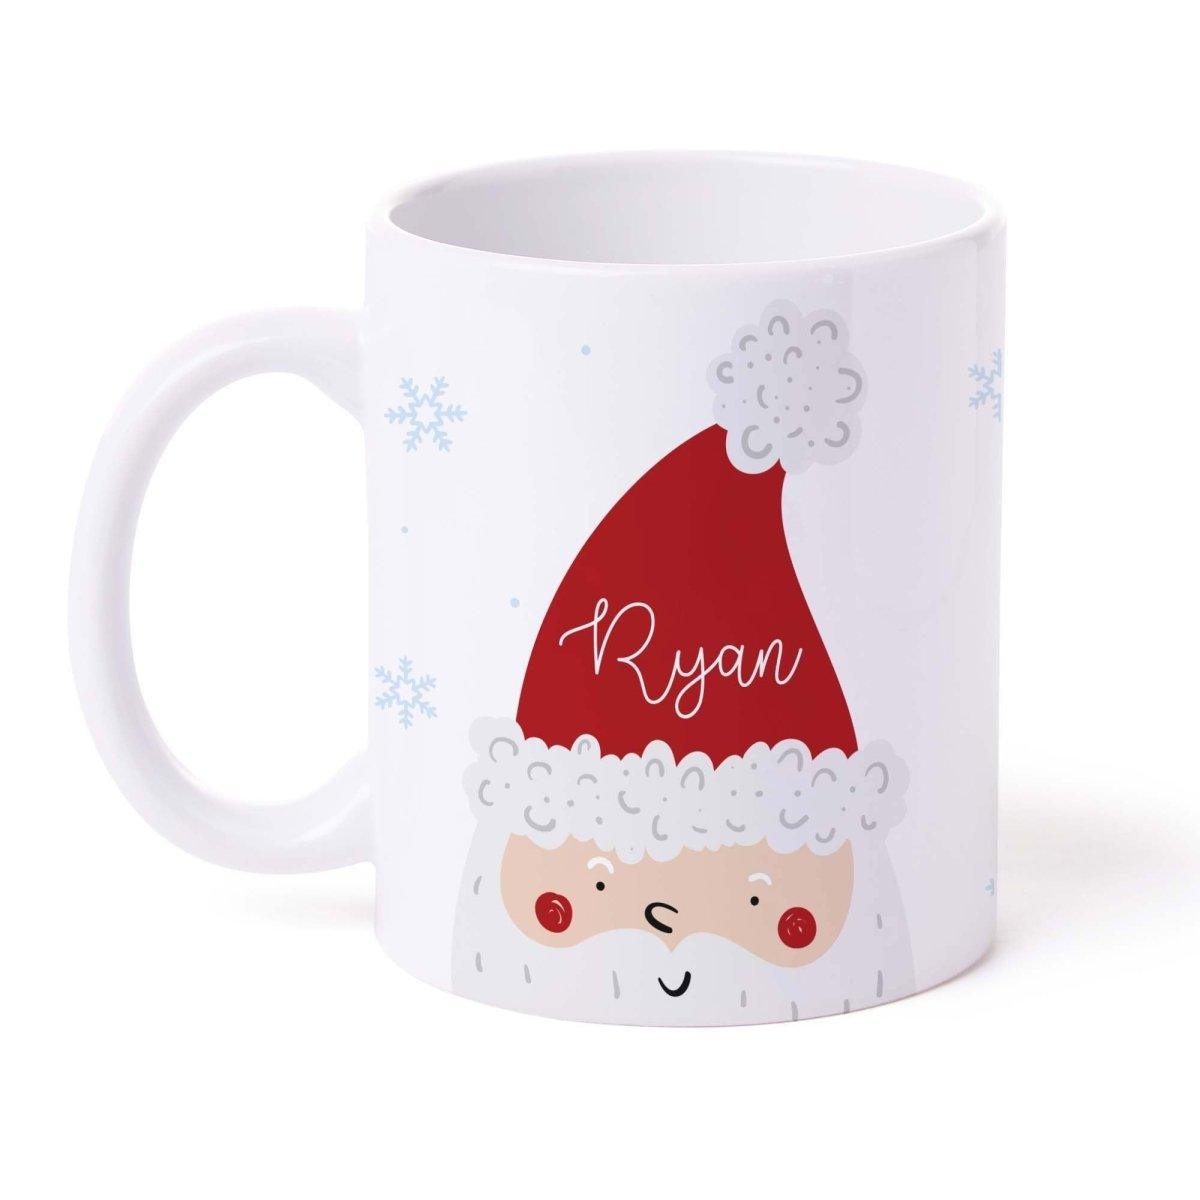 Personalised Santa Mug, Personalised Christmas Mug, Xmas Mug Gift, Child Christmas Mug, Christmas Eve Box Fillers, Stocking Filler, Mug - Amy Lucy